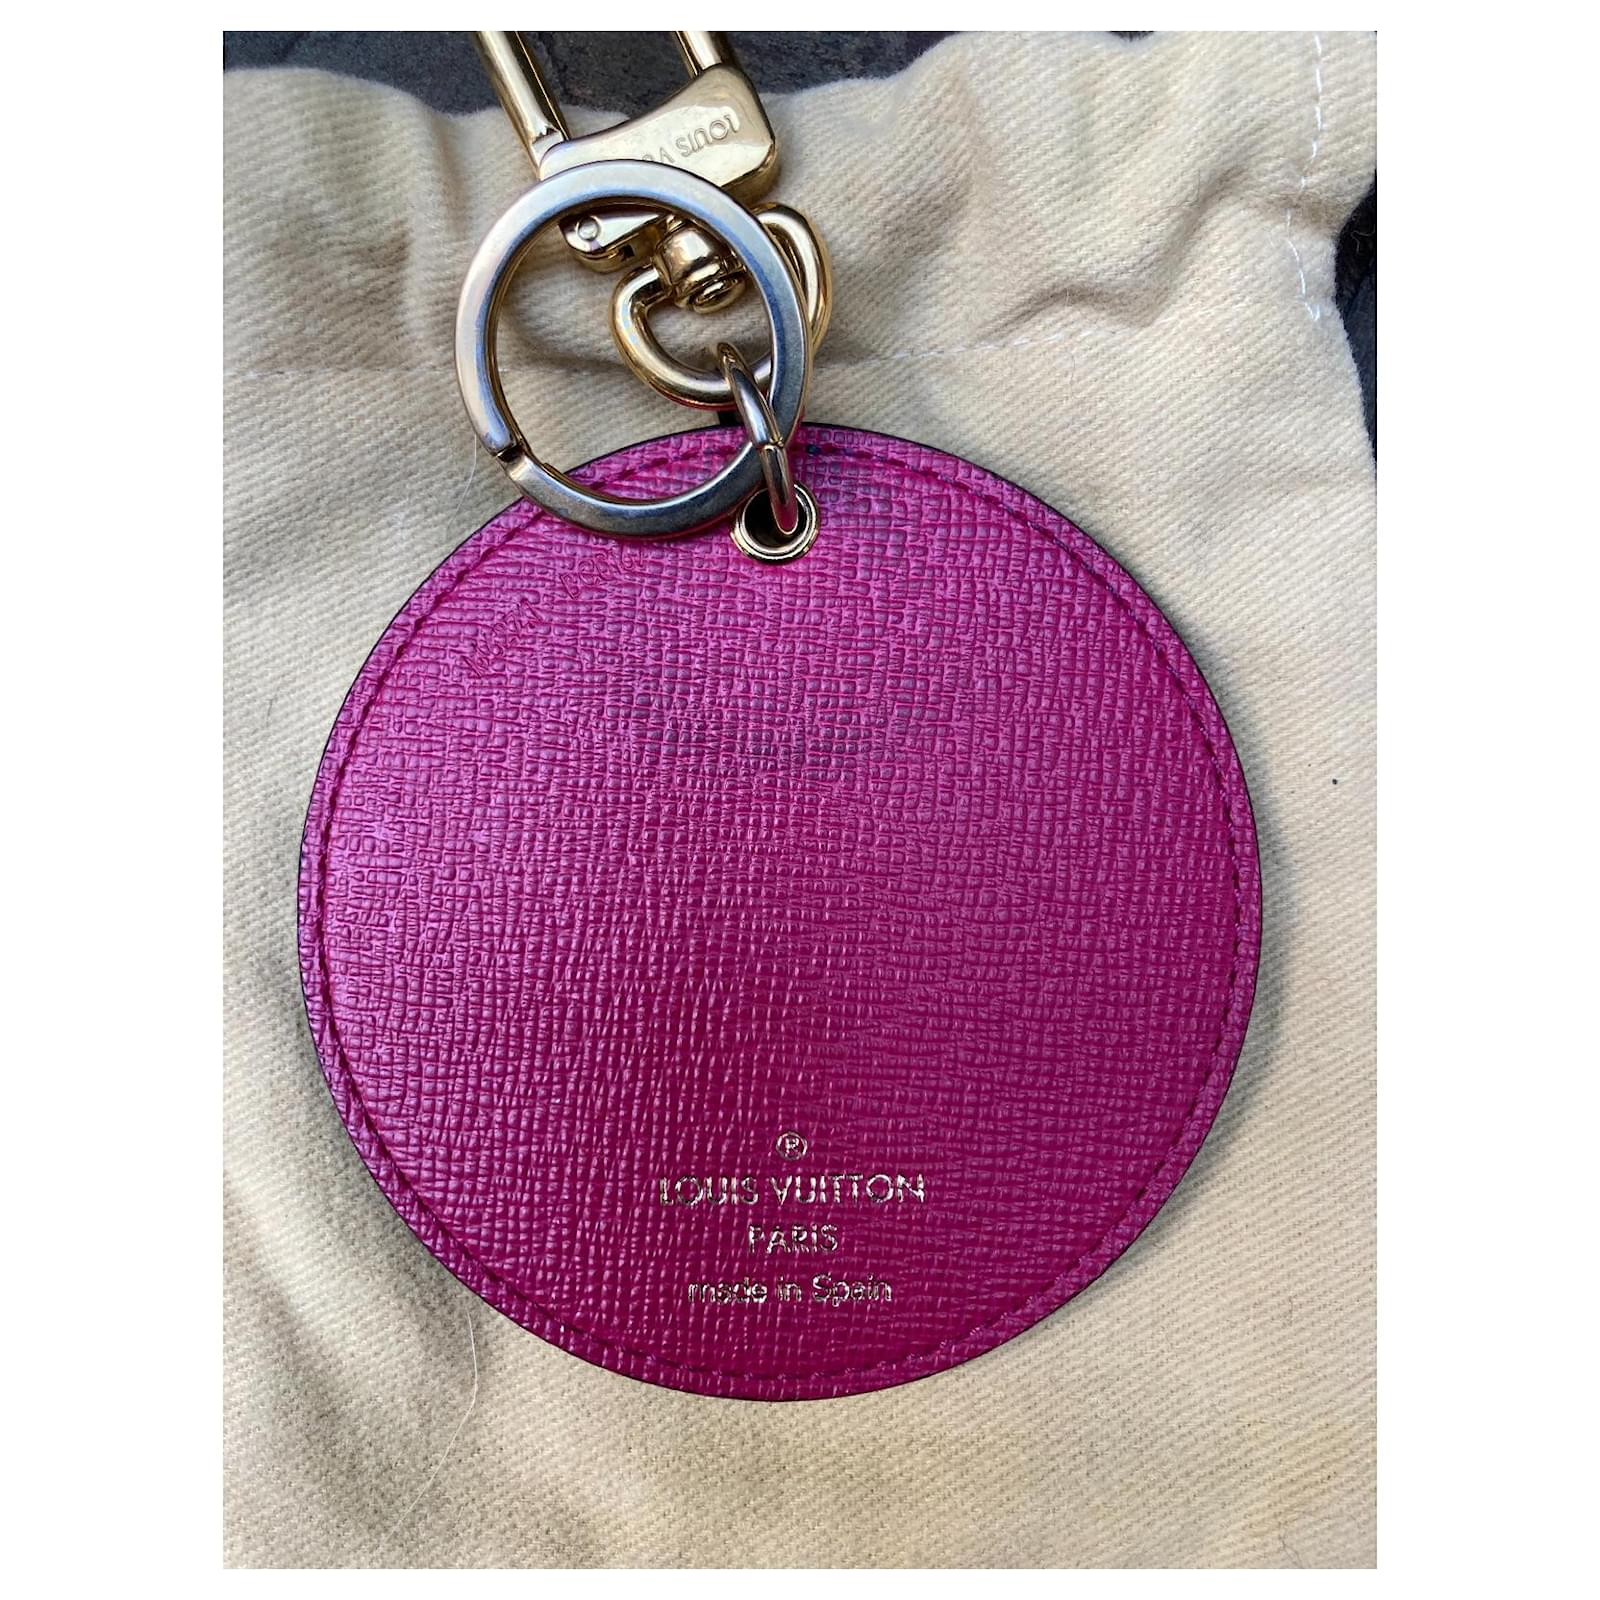 Superb Louis Vuitton World Tour bag jewelry Brown Pink Blue Gold